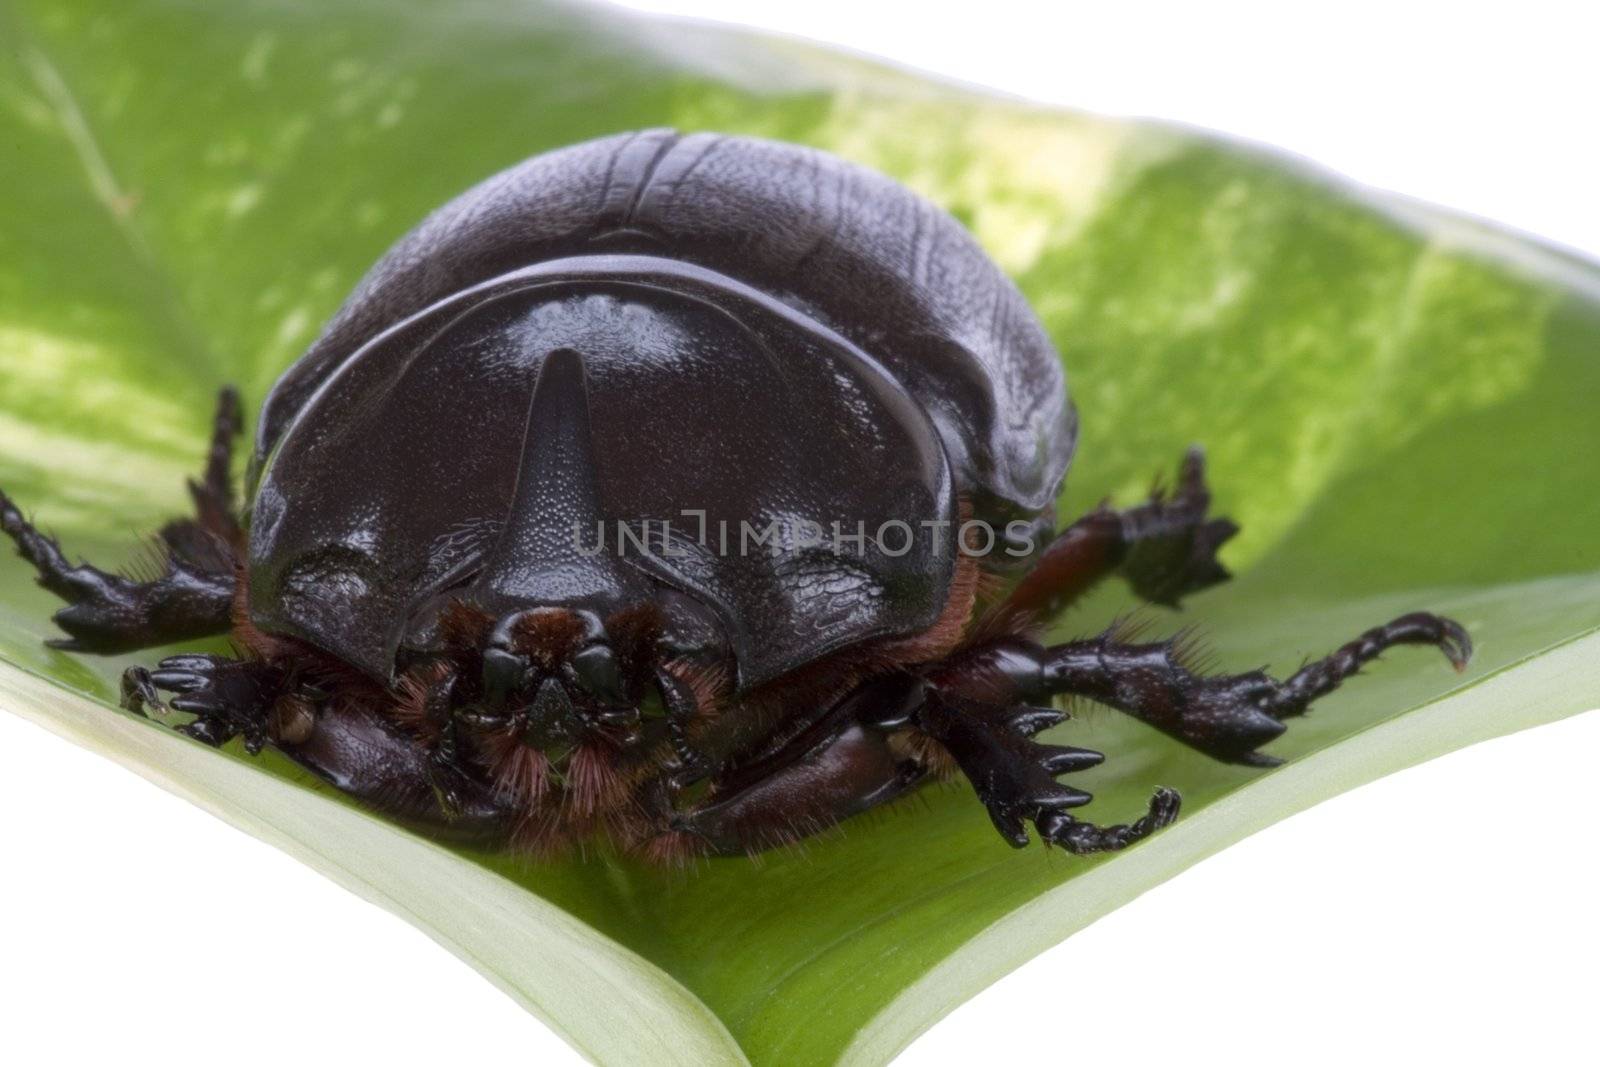 Rhinocerous Beetle (Oryctes rhinoceros) by shariffc